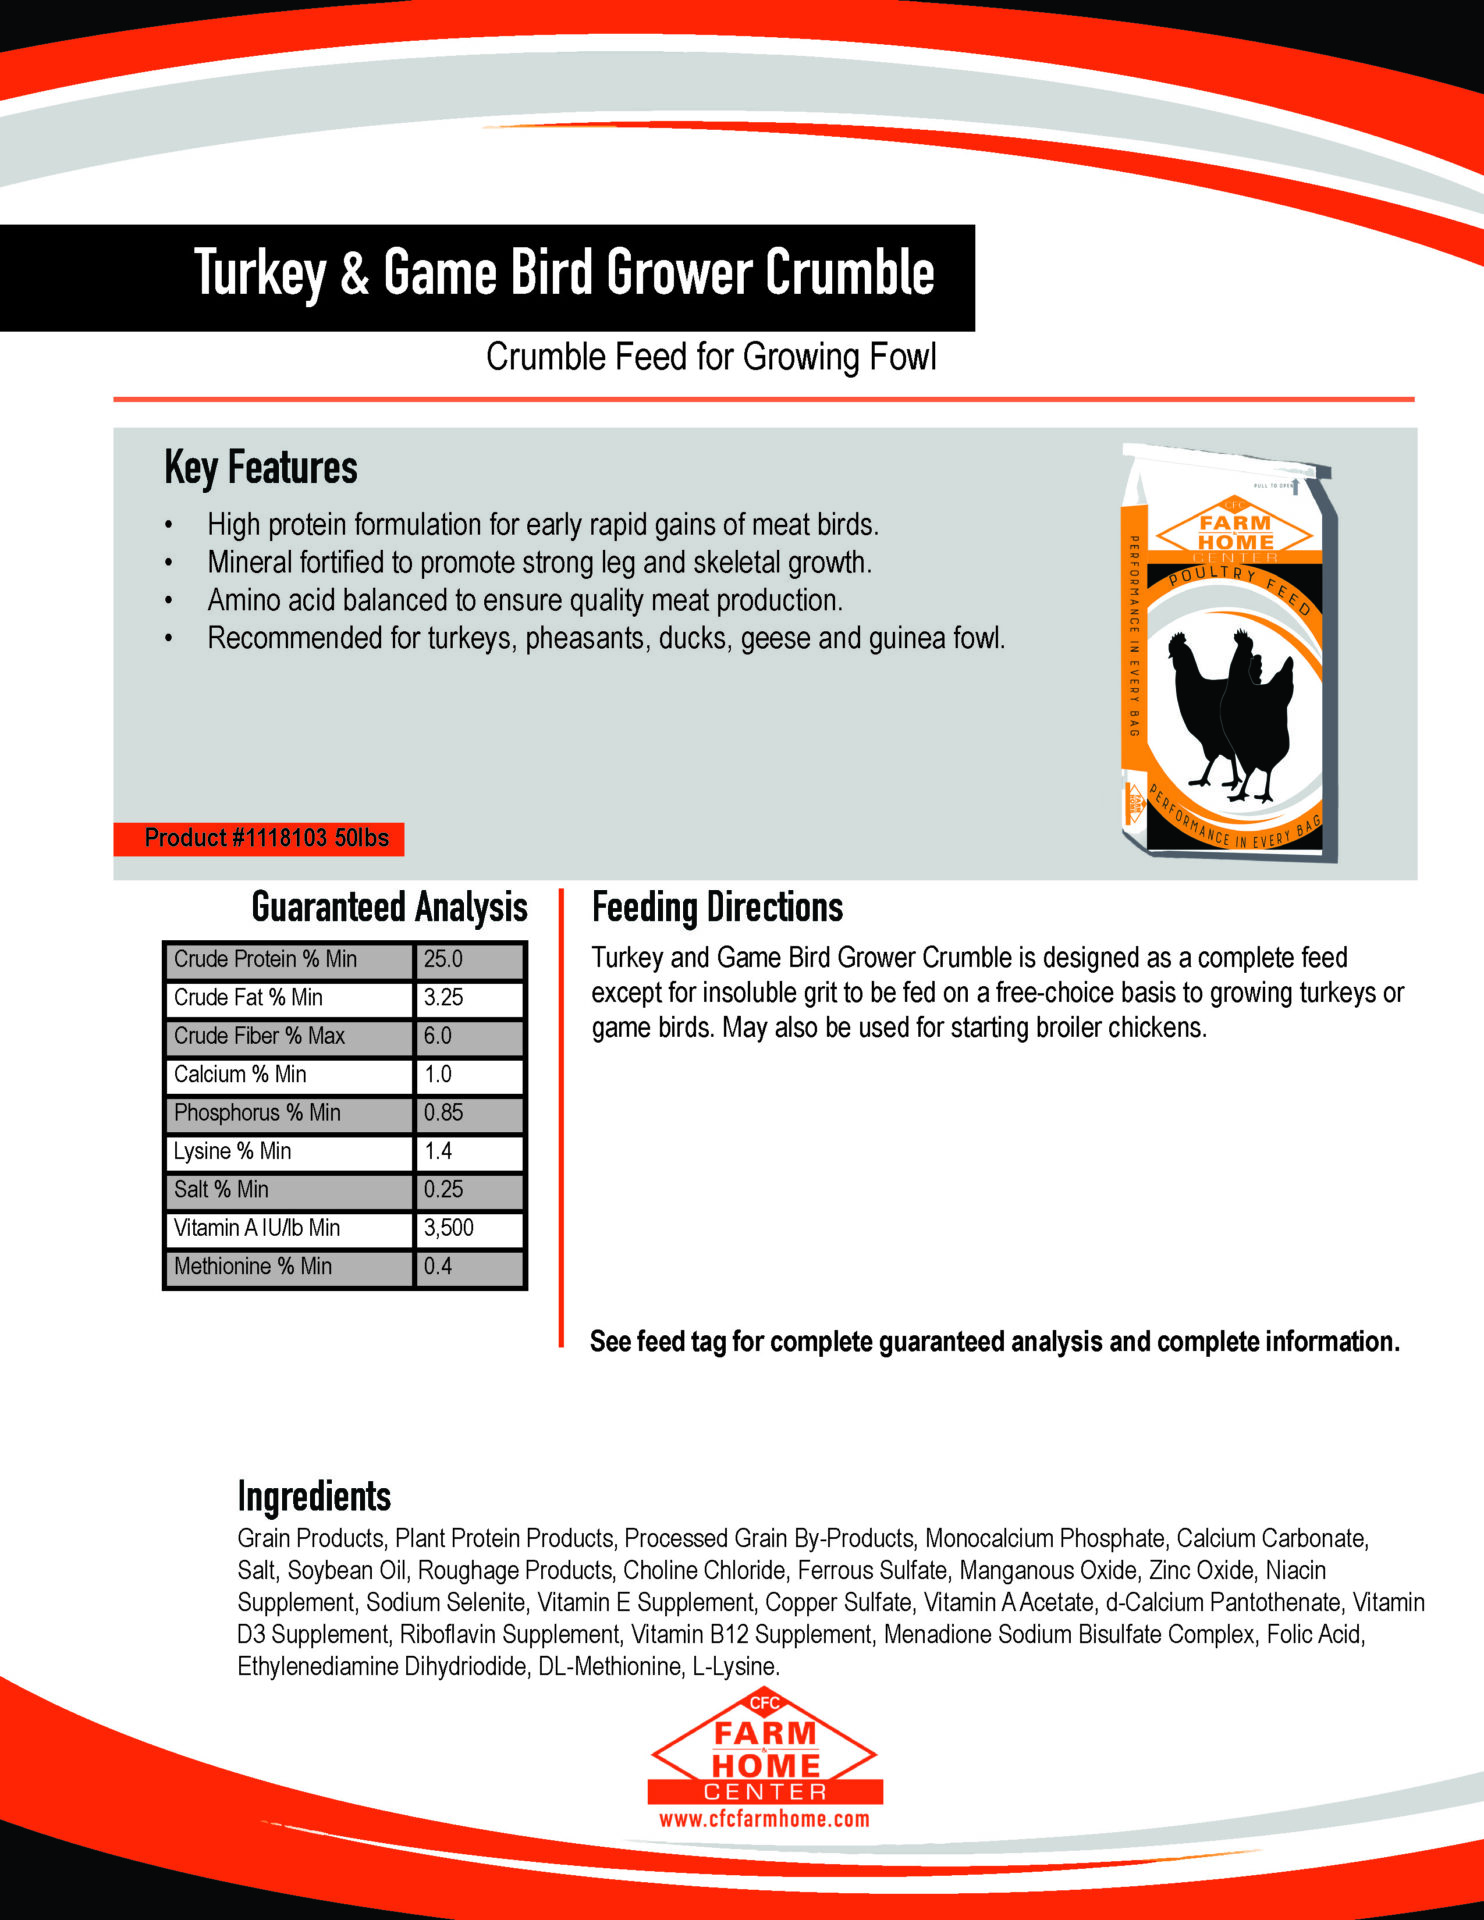 Turkey & Game Bird Grower Crumble feed spec sheet